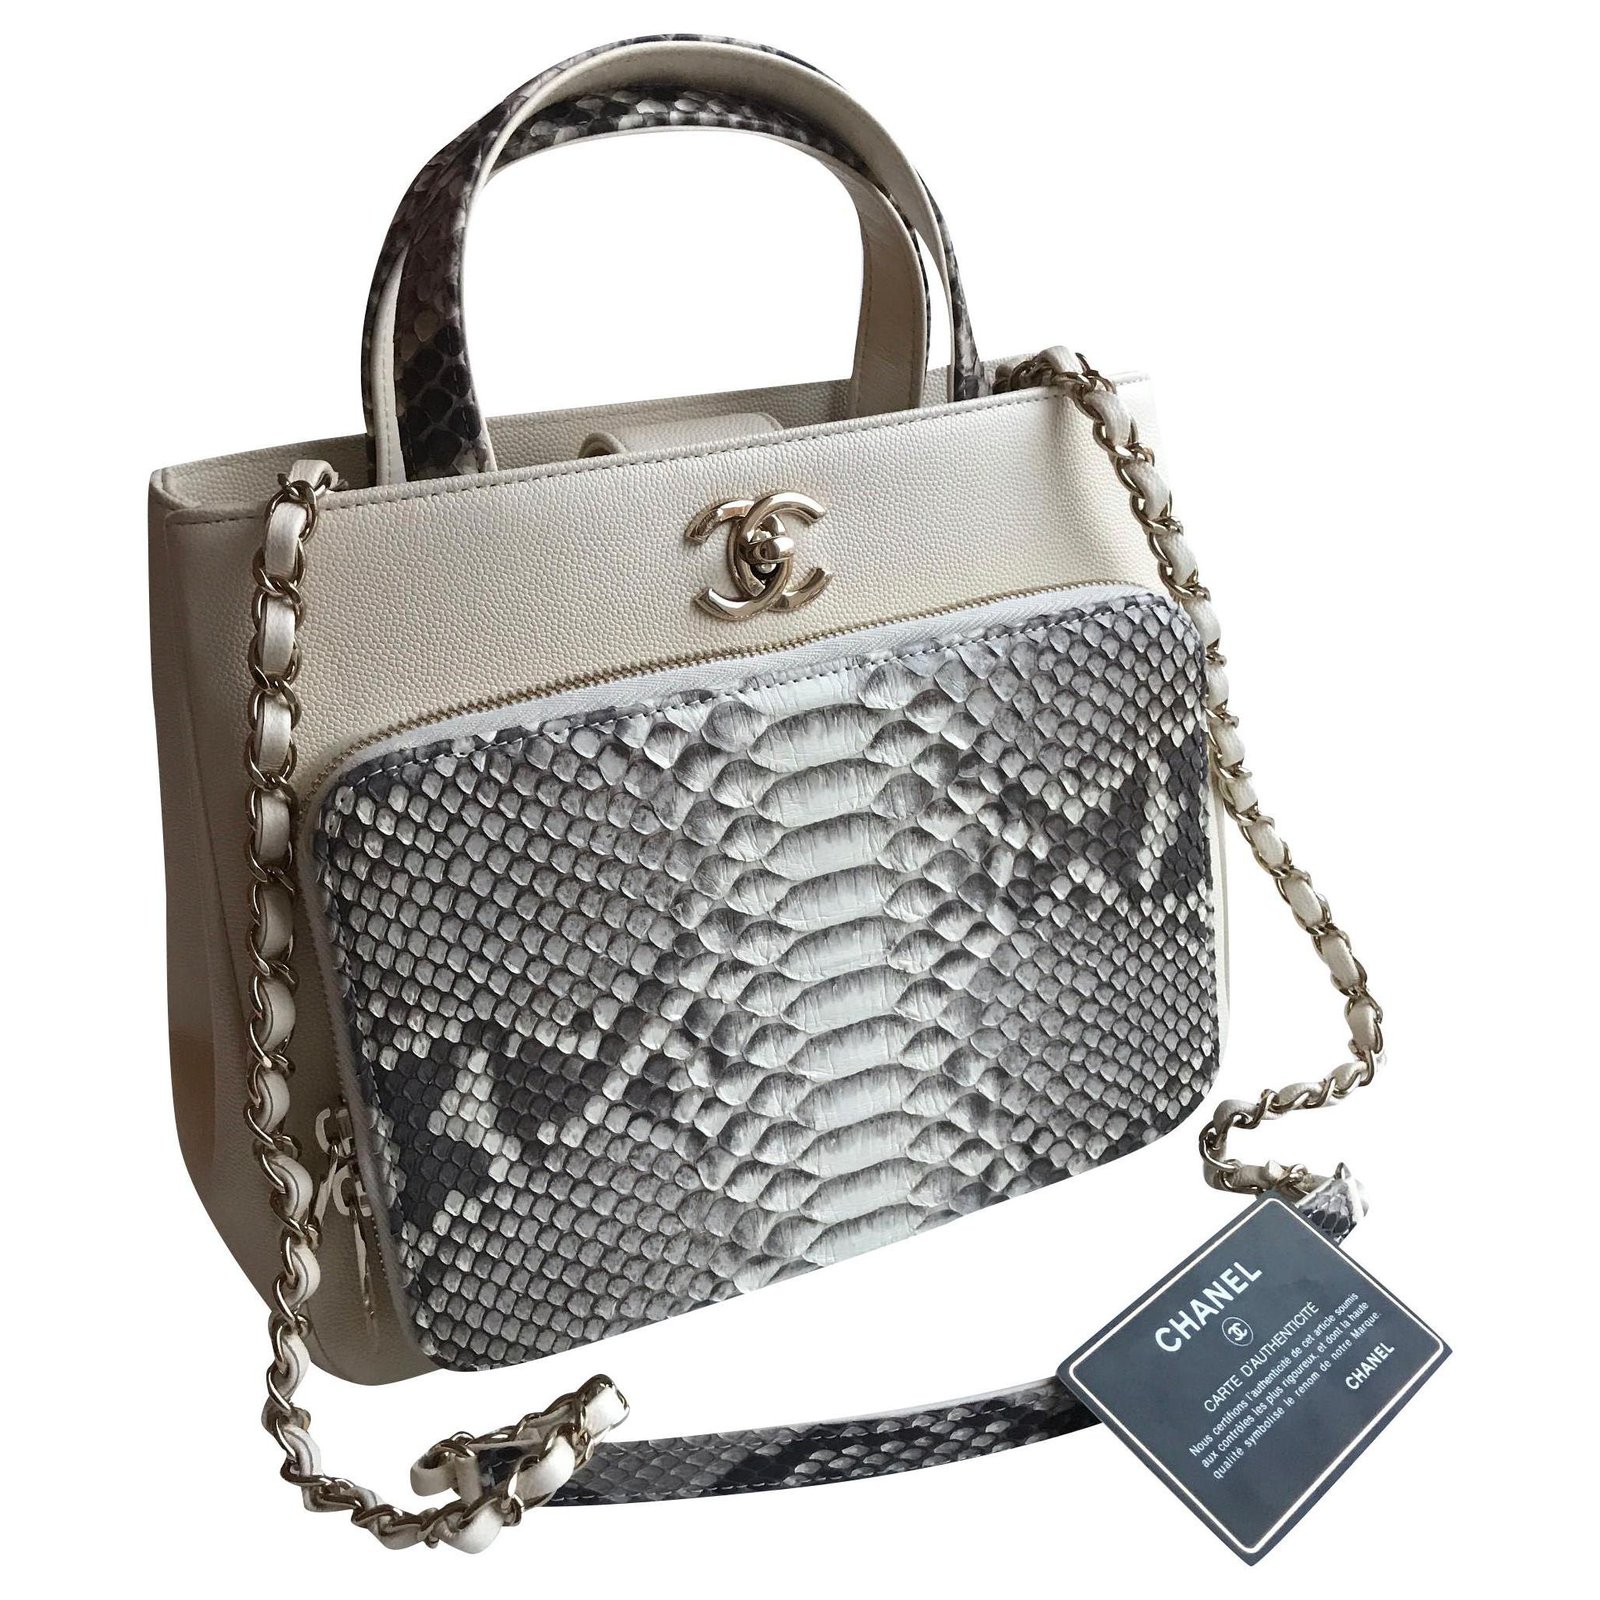 LA' Tote bag, Chanel: Handbags and Accessories, 2020